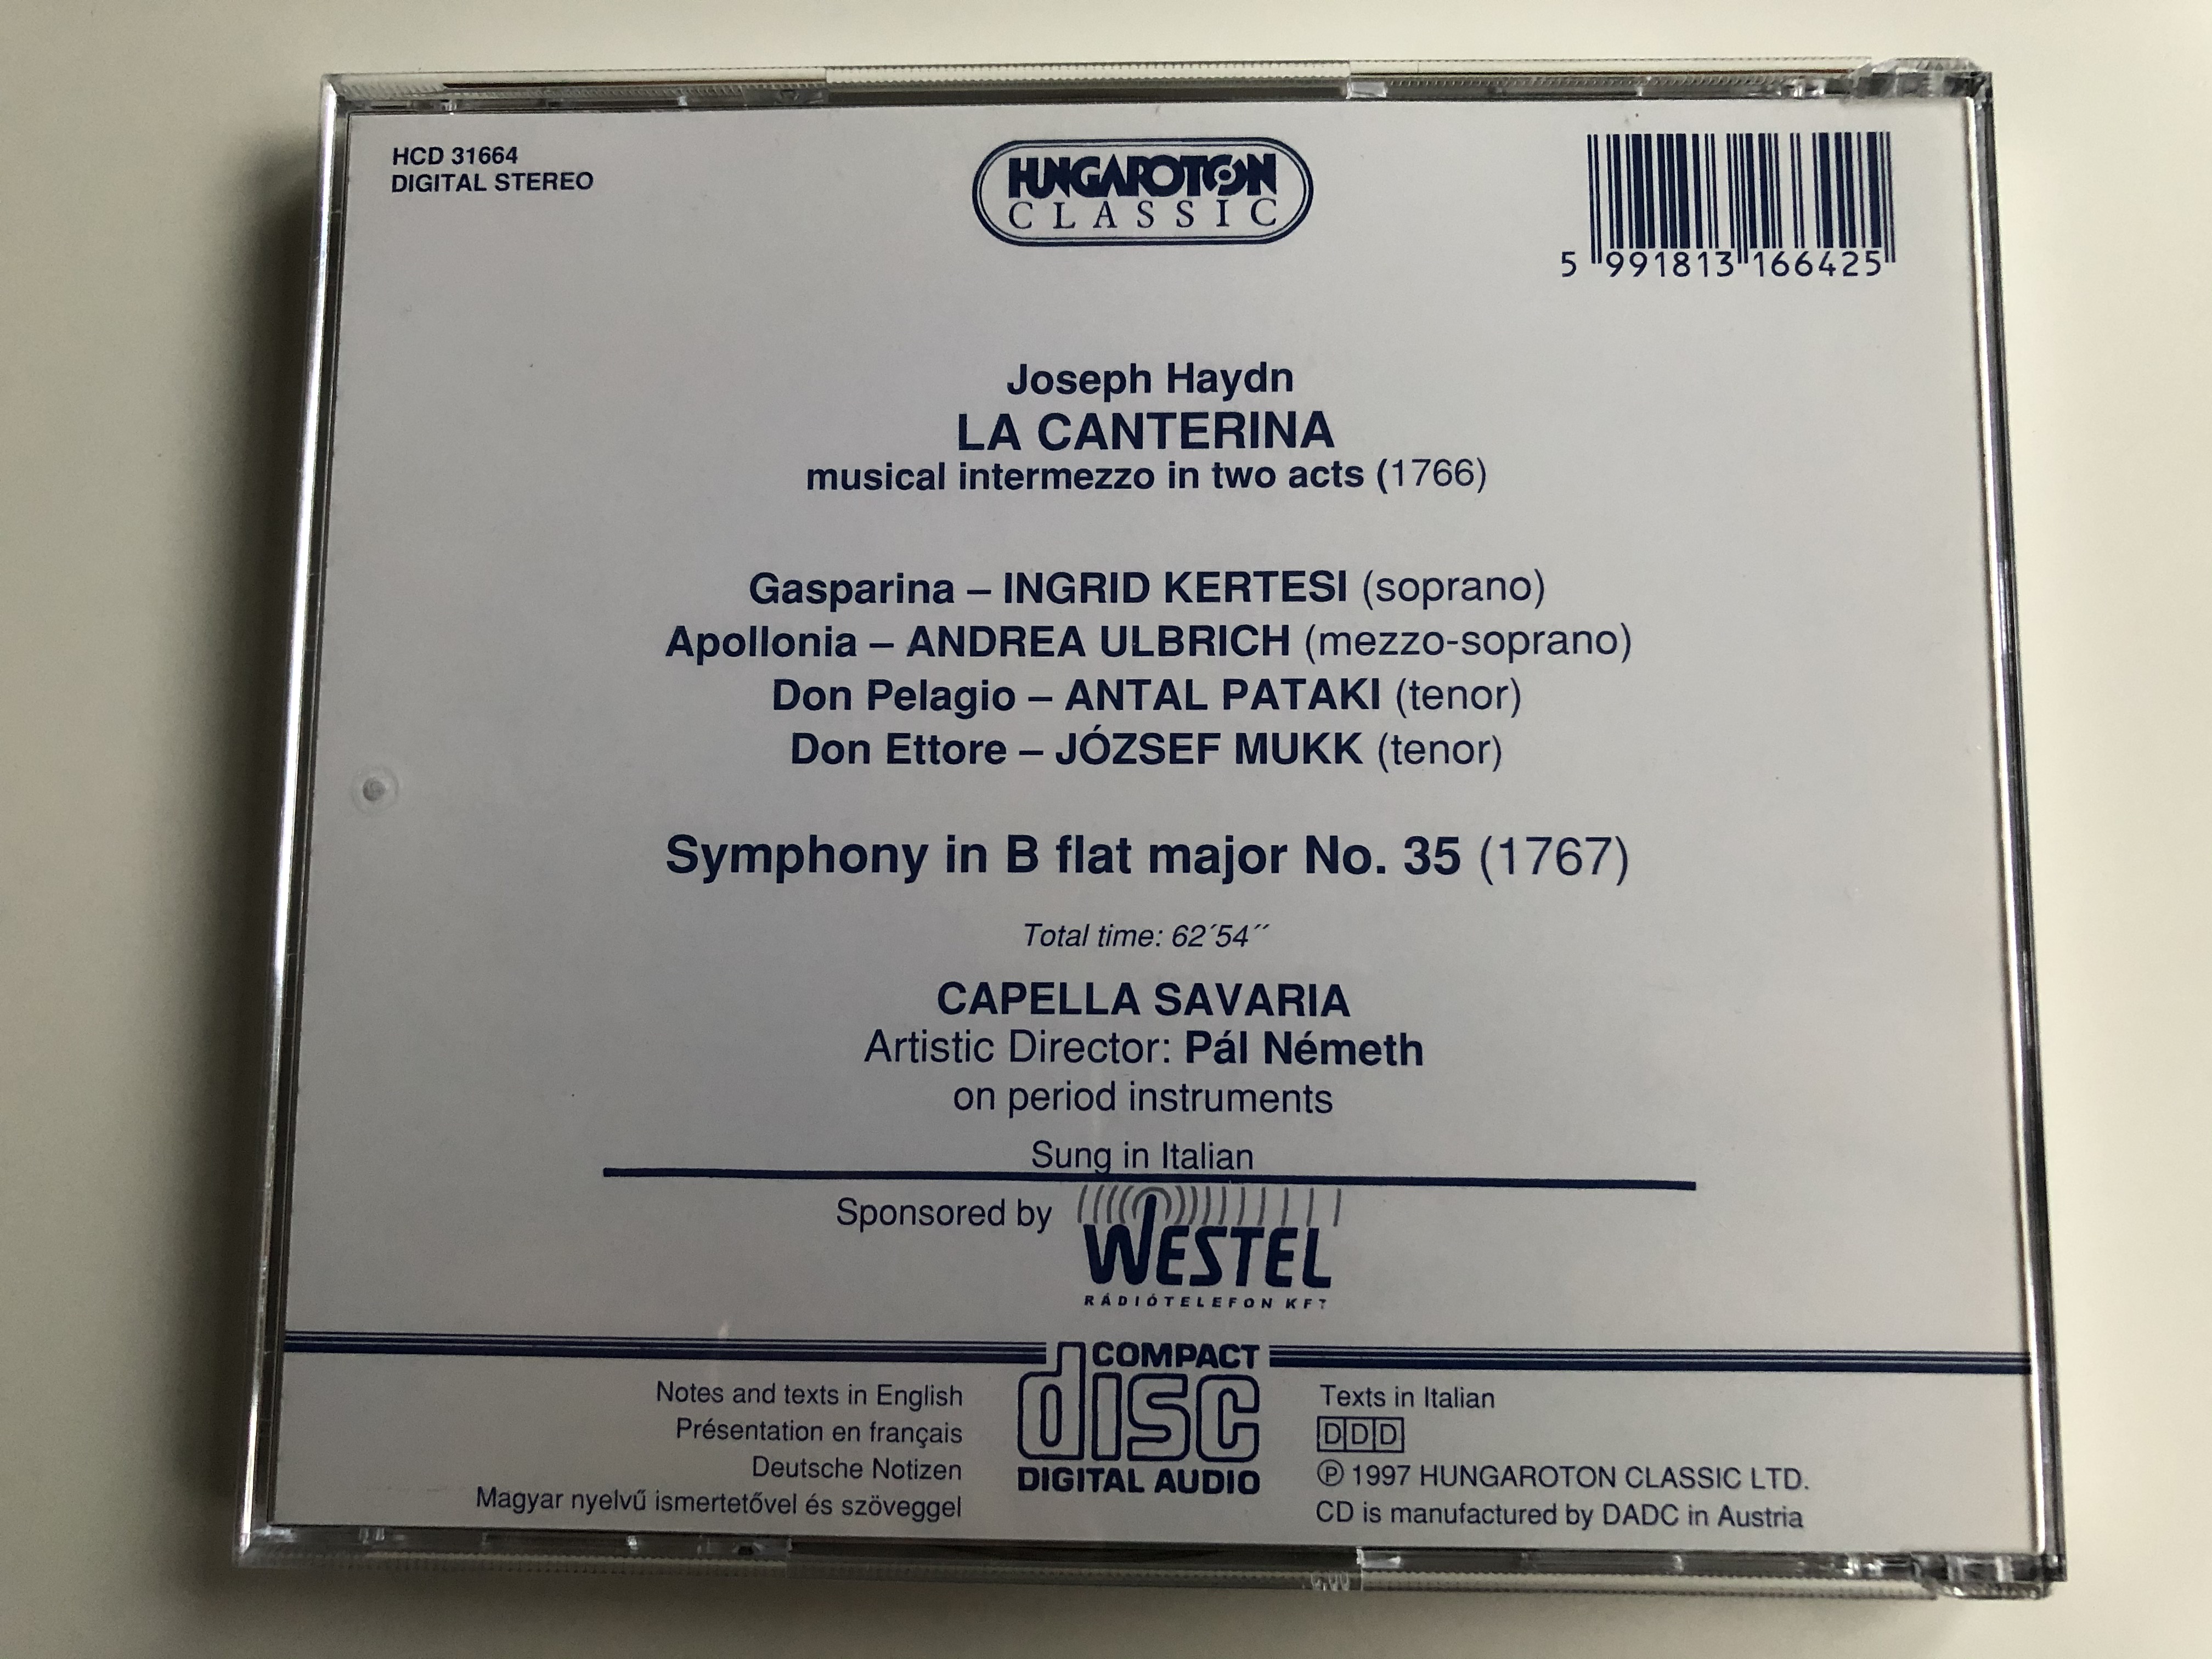 haydn-la-canterina-intermezzo-in-musica-ingrid-kertesi-andrea-ulbrich-antal-pataki-j-zsef-mukk-capella-savaria-pal-nemeth-hungaroton-classic-audio-cd-1997-stereo-hcd-31664-12-.jpg